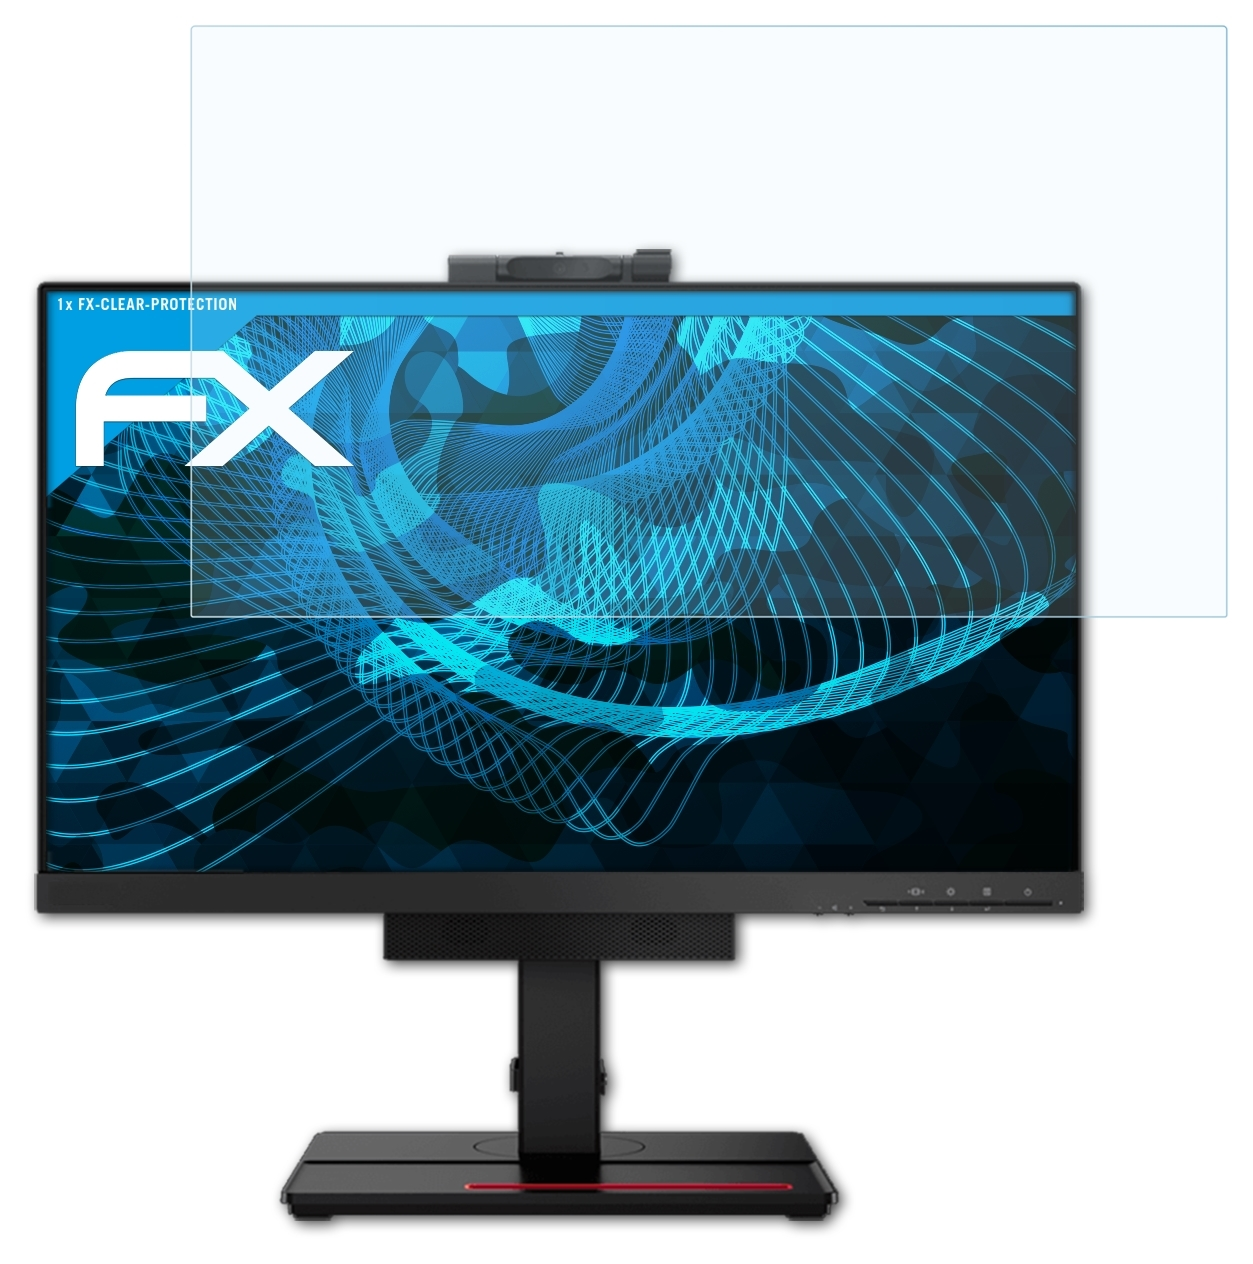 FX-Clear 11GDPAT1EU) ThinkCentre Lenovo Displayschutz(für ATFOLIX